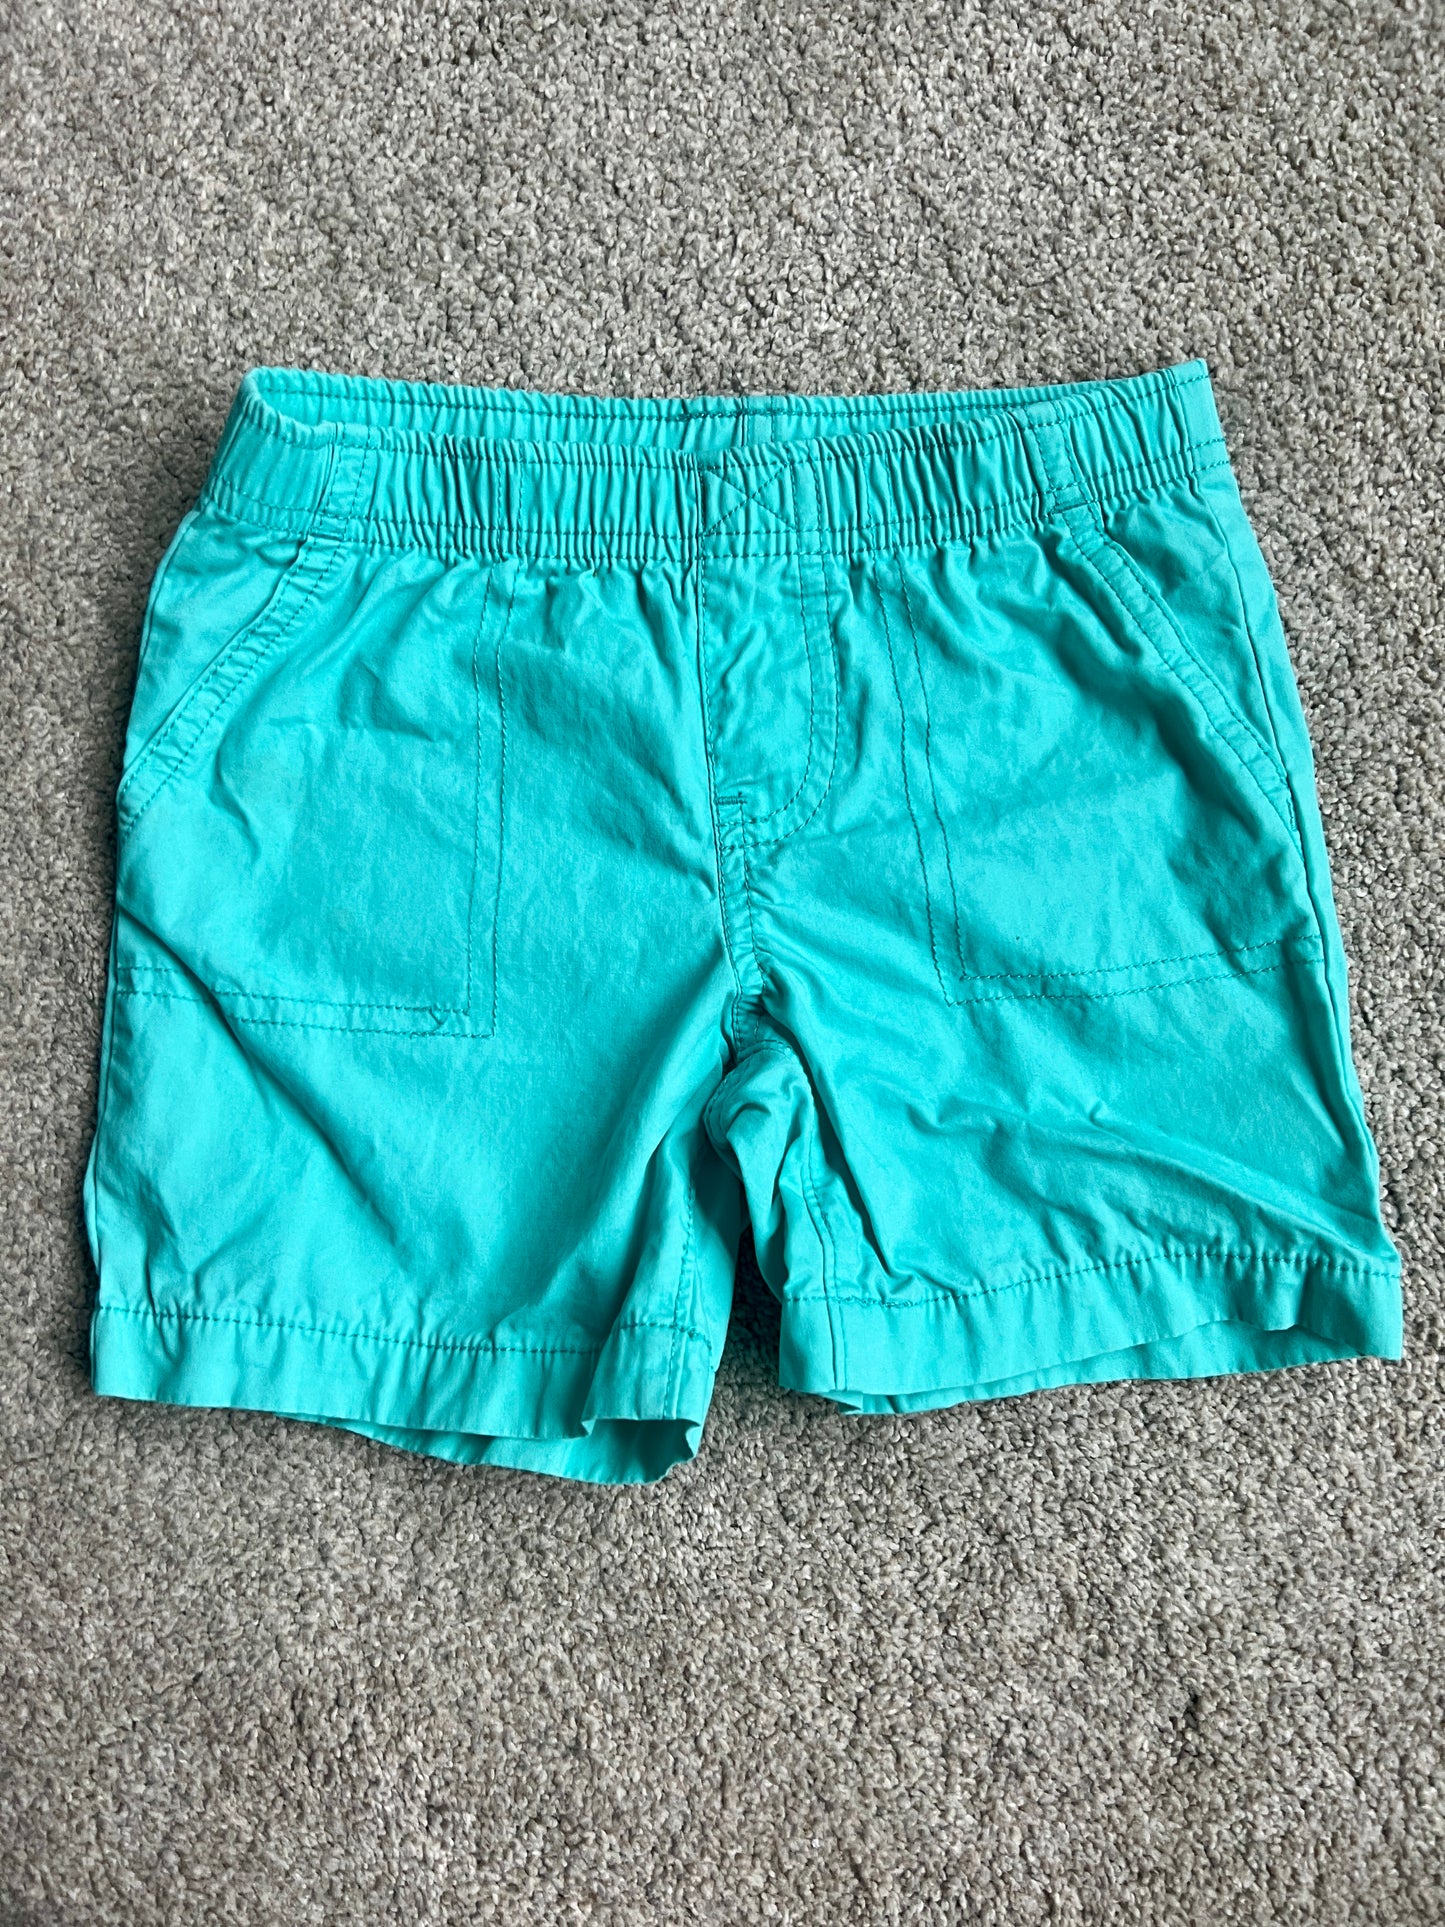 Boys 2T shorts, VGUC